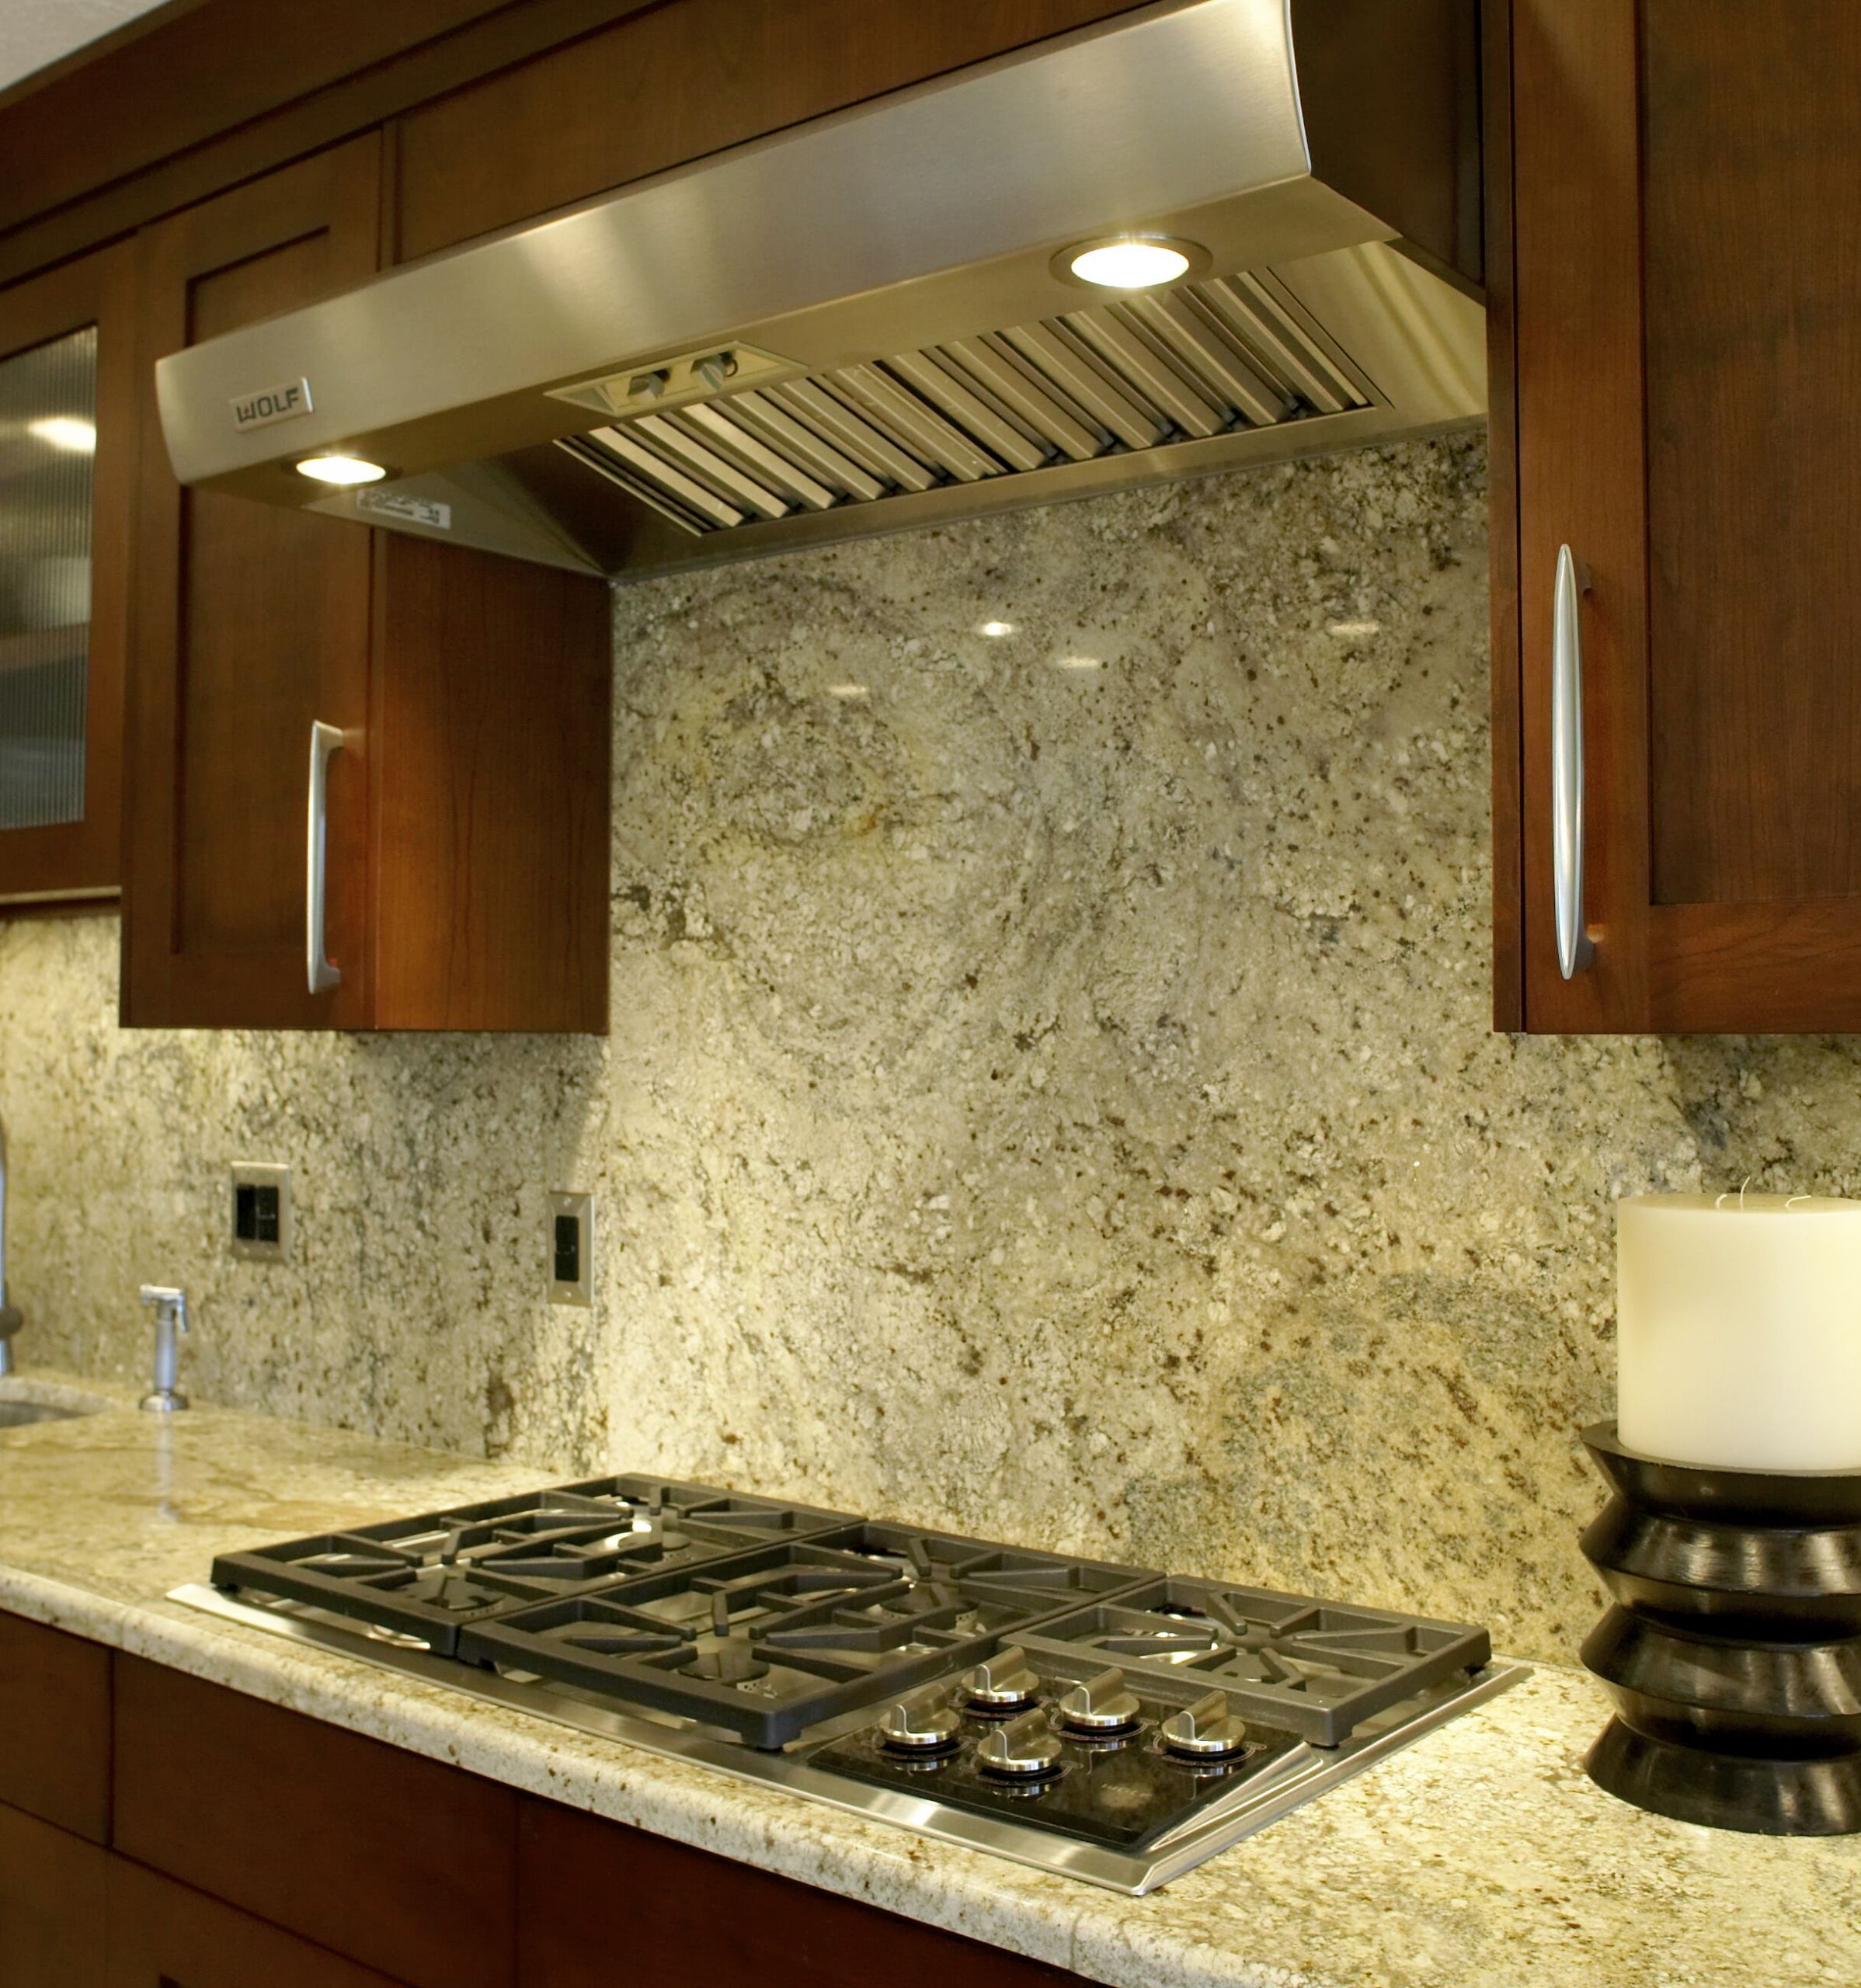 Kitchen Granite Backsplash
 Are backsplashes important in a kitchen